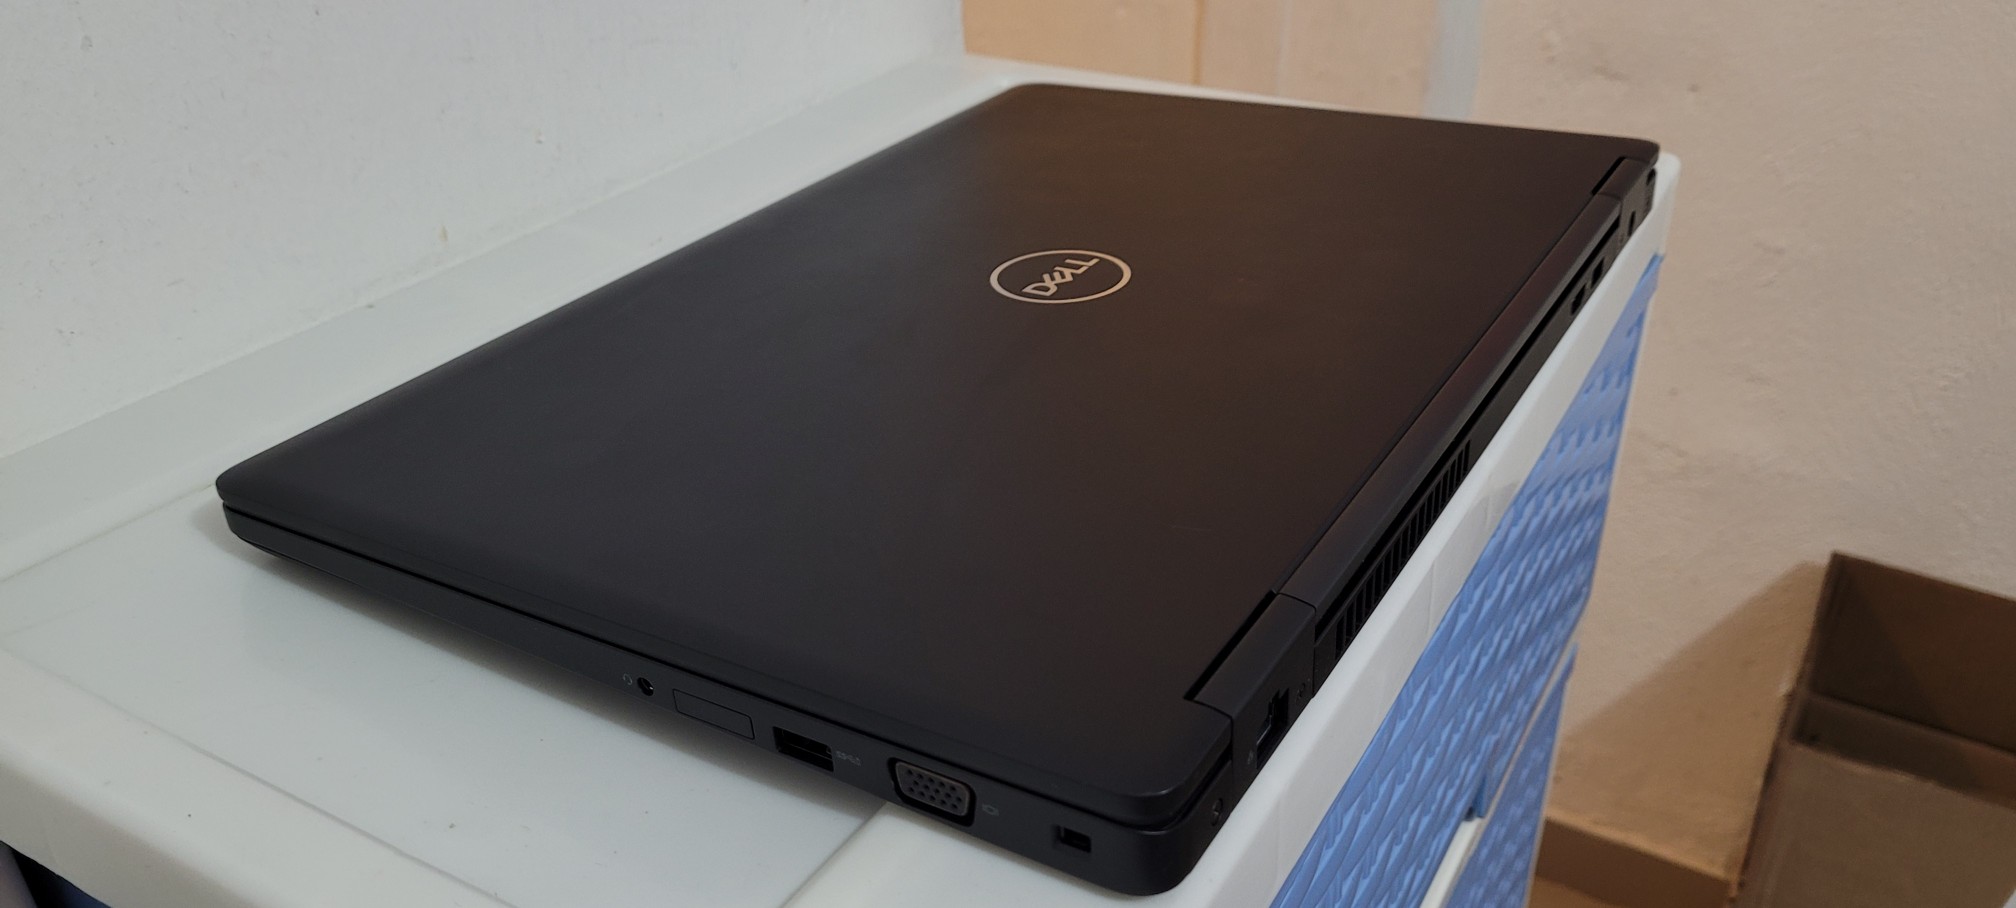 computadoras y laptops - Dell 5580 17 Pulg Core i5 7ma Gen Ram 12gb ddr4 Disco 128gb SSD NVidea 6gb full 2